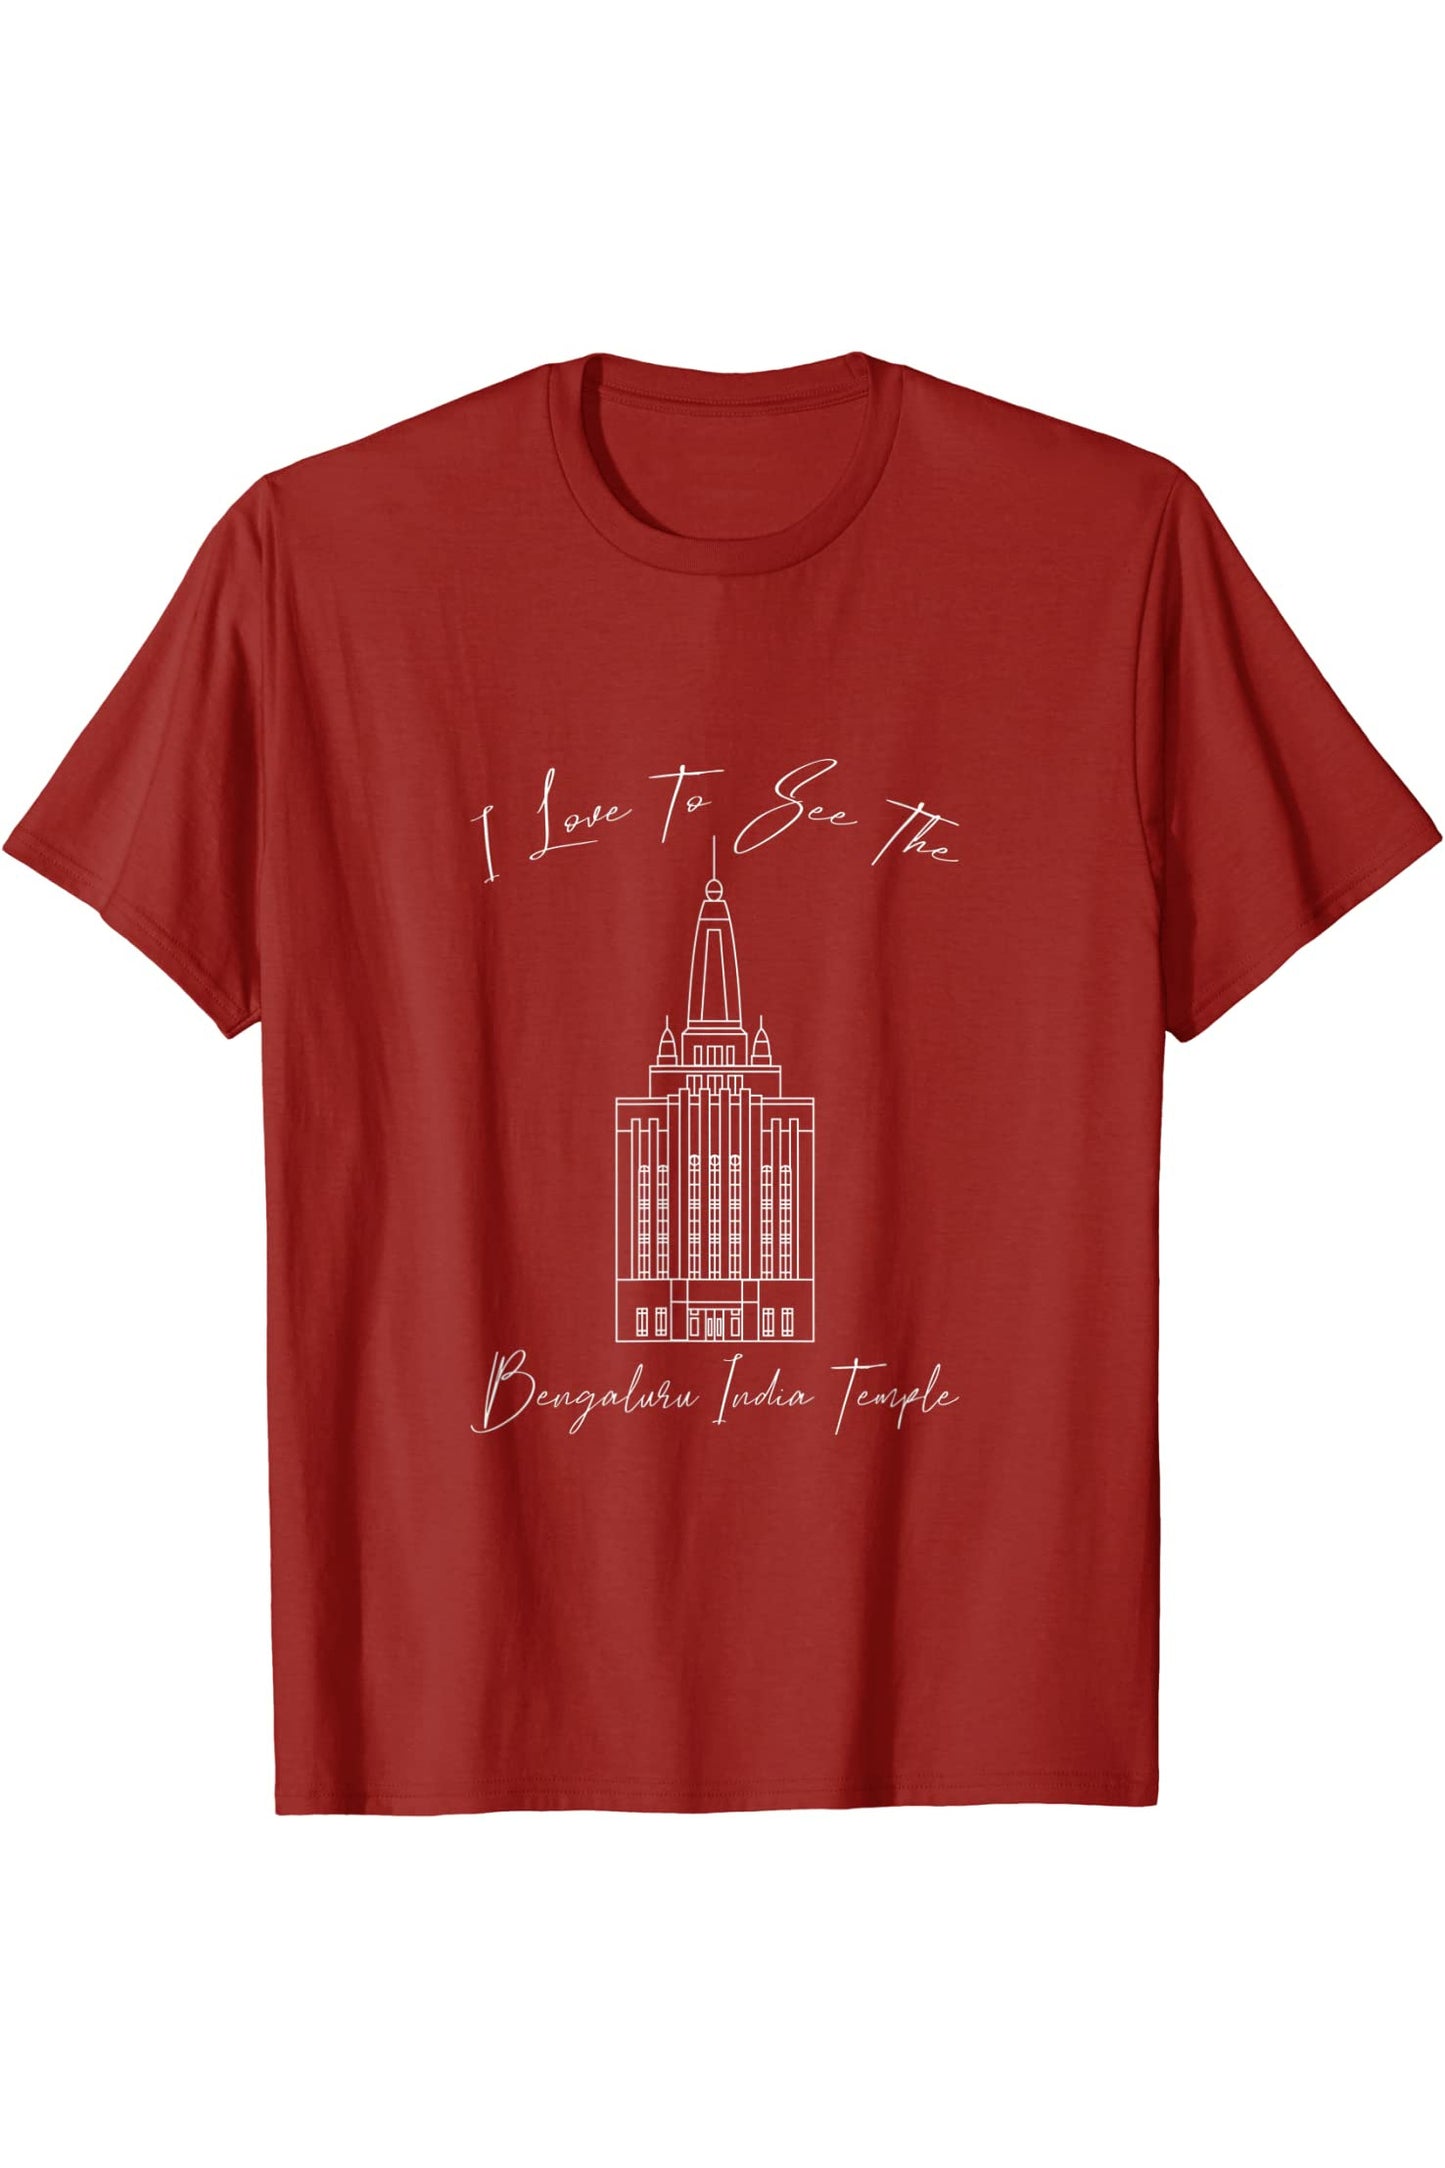 Bengaluru India Temple T-Shirt - Calligraphy Style (English) US